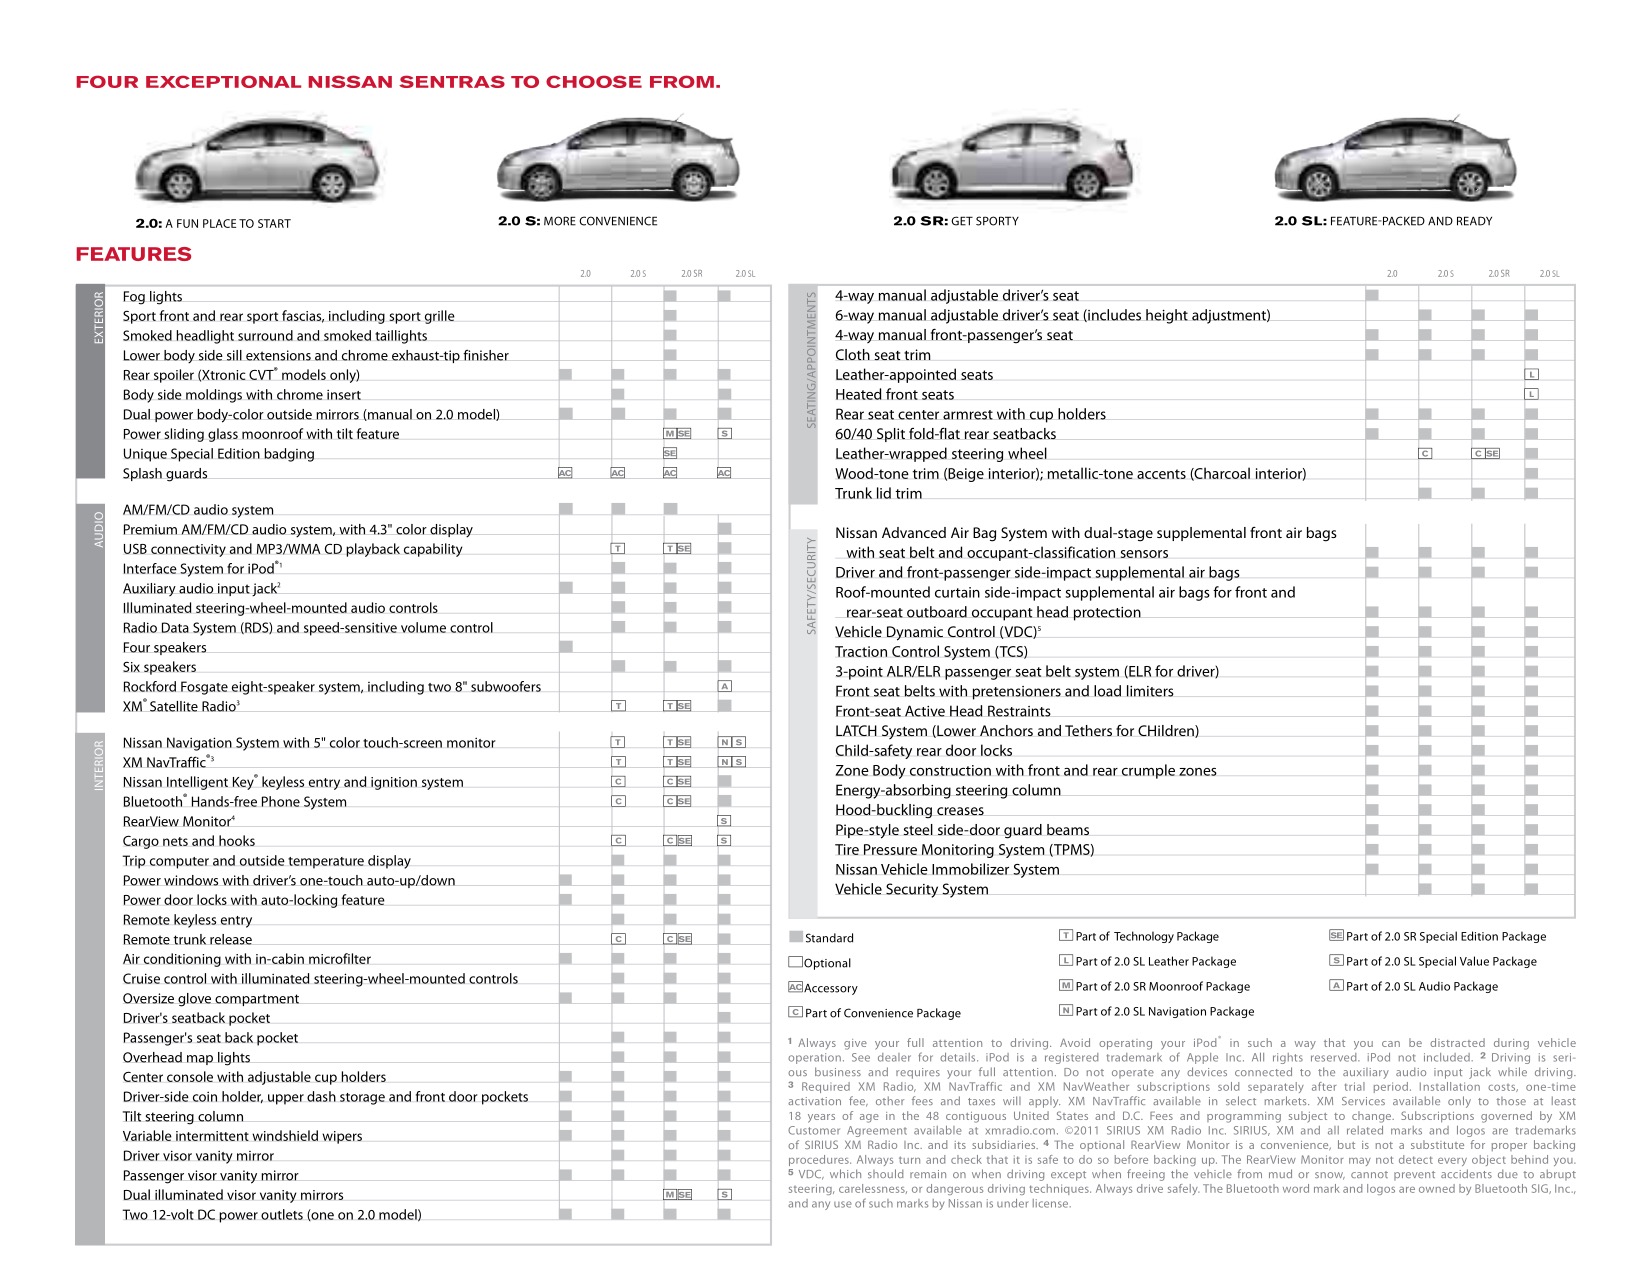 2012 Nissan Sentra Brochure Page 3